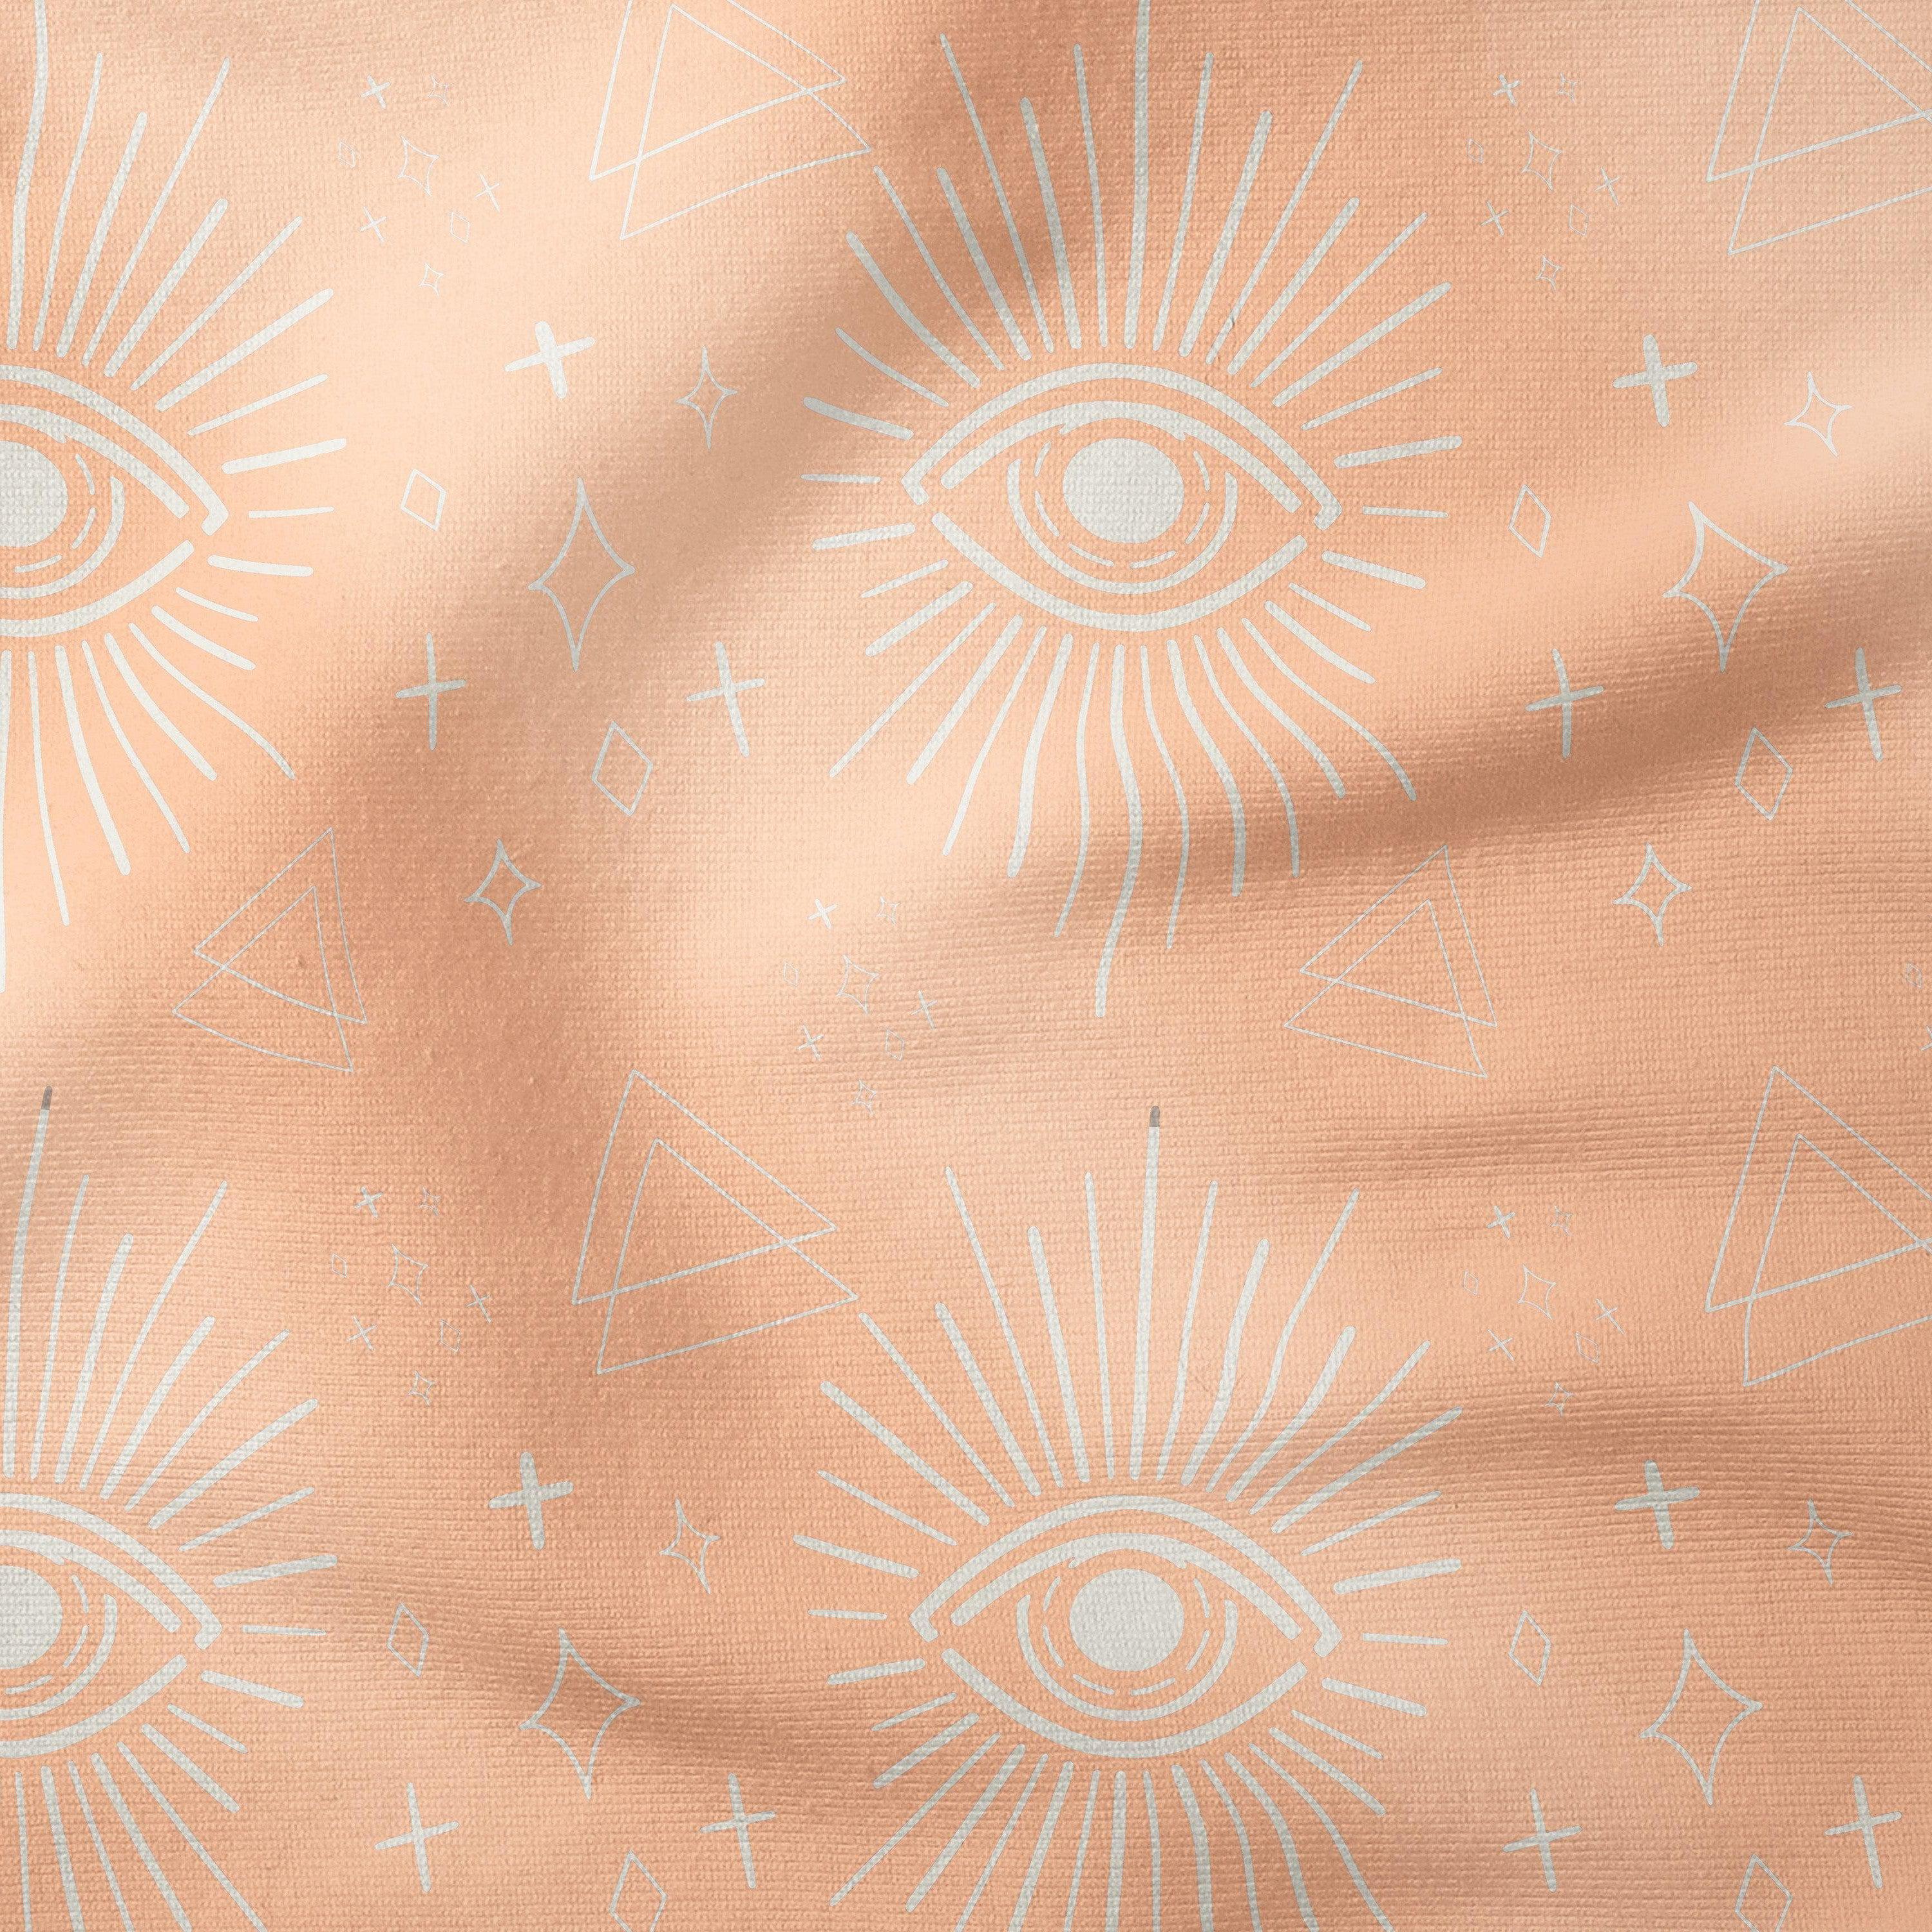 Mystic Eyes-Art Print Fabric-Melco Fabrics-Tofu on Peach Fuzz-Cotton Poplin (110gsm)-Melco Fabrics-Online-Fabric-Shop-Australia